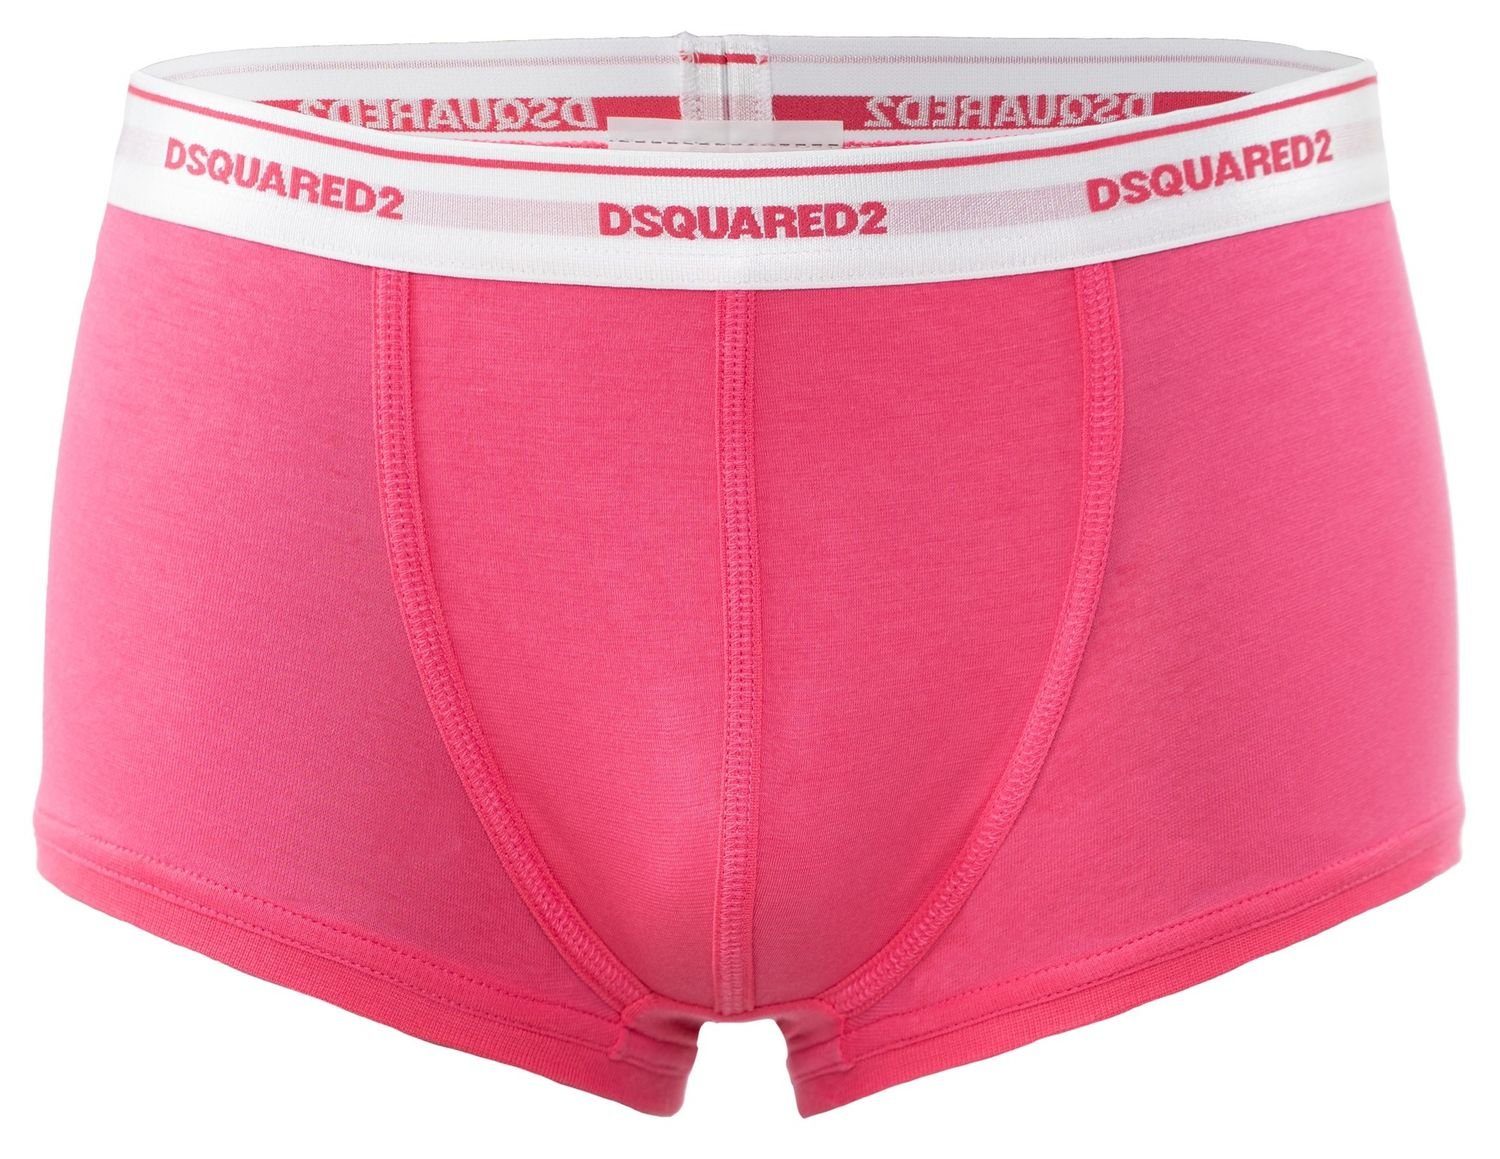 Dsquared2 Trunk Dsquared2 / / Boxershorts Pants pink / / in L Shorts XL XXL M / Größe Boxer (1-St) / S 